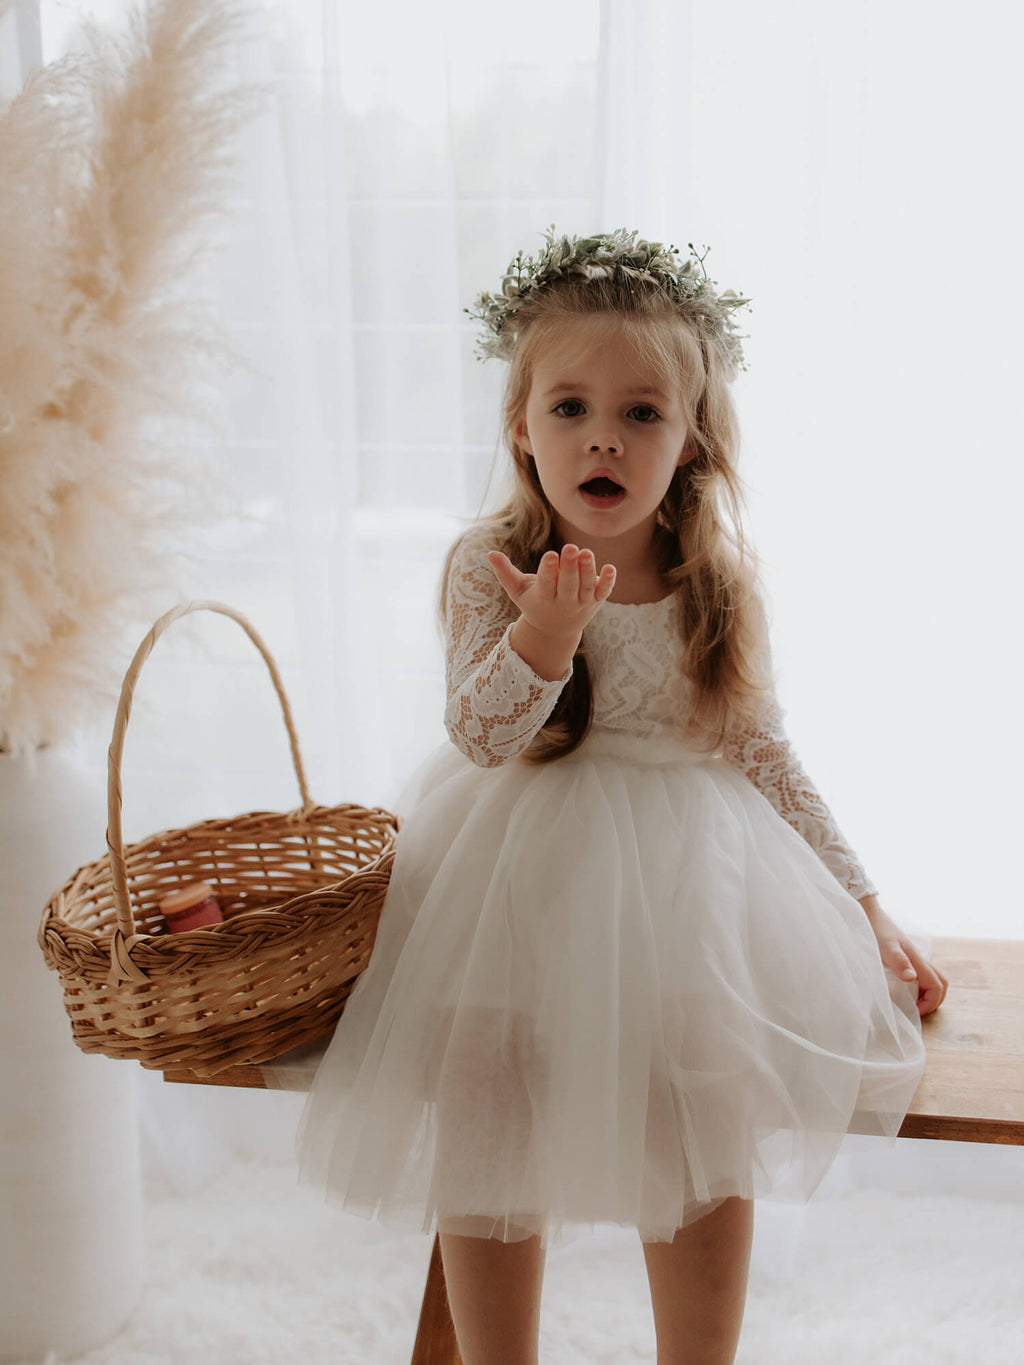 Belle tea length flower girl dress in ivory is worn by a toddler.